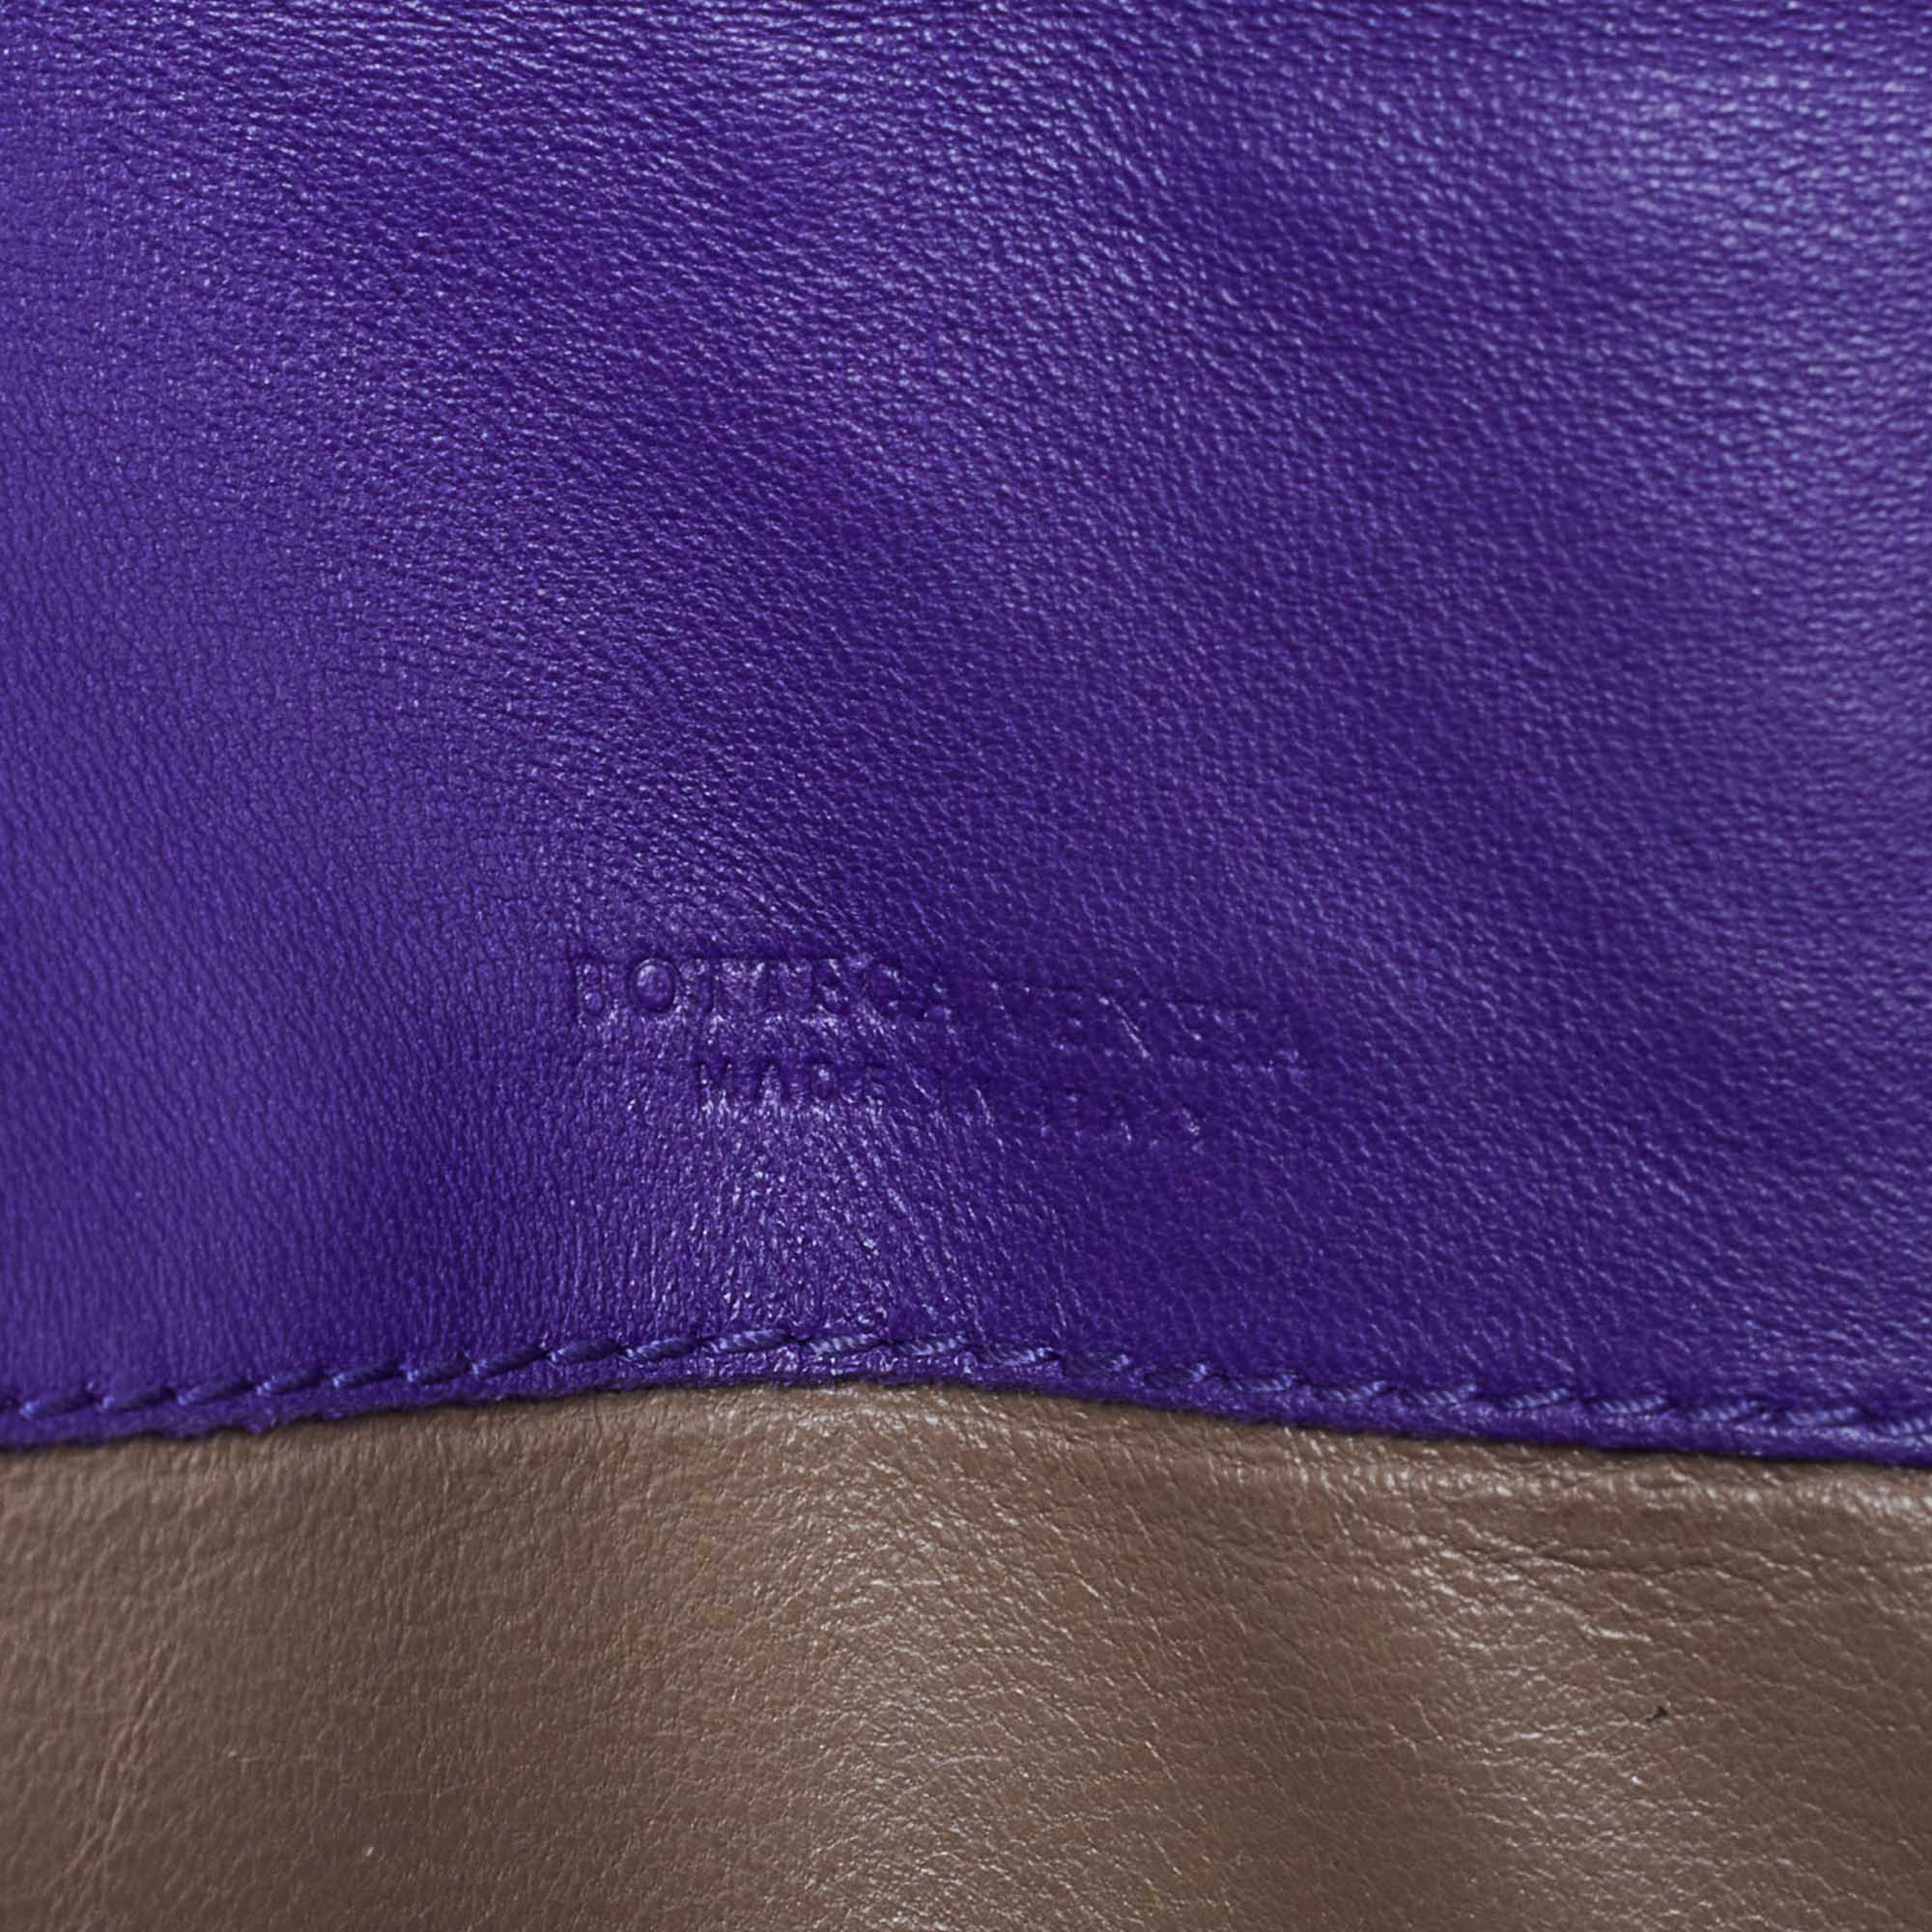 Bottega Veneta Purple Intrecciato Leather Bifold Organizer Wallet